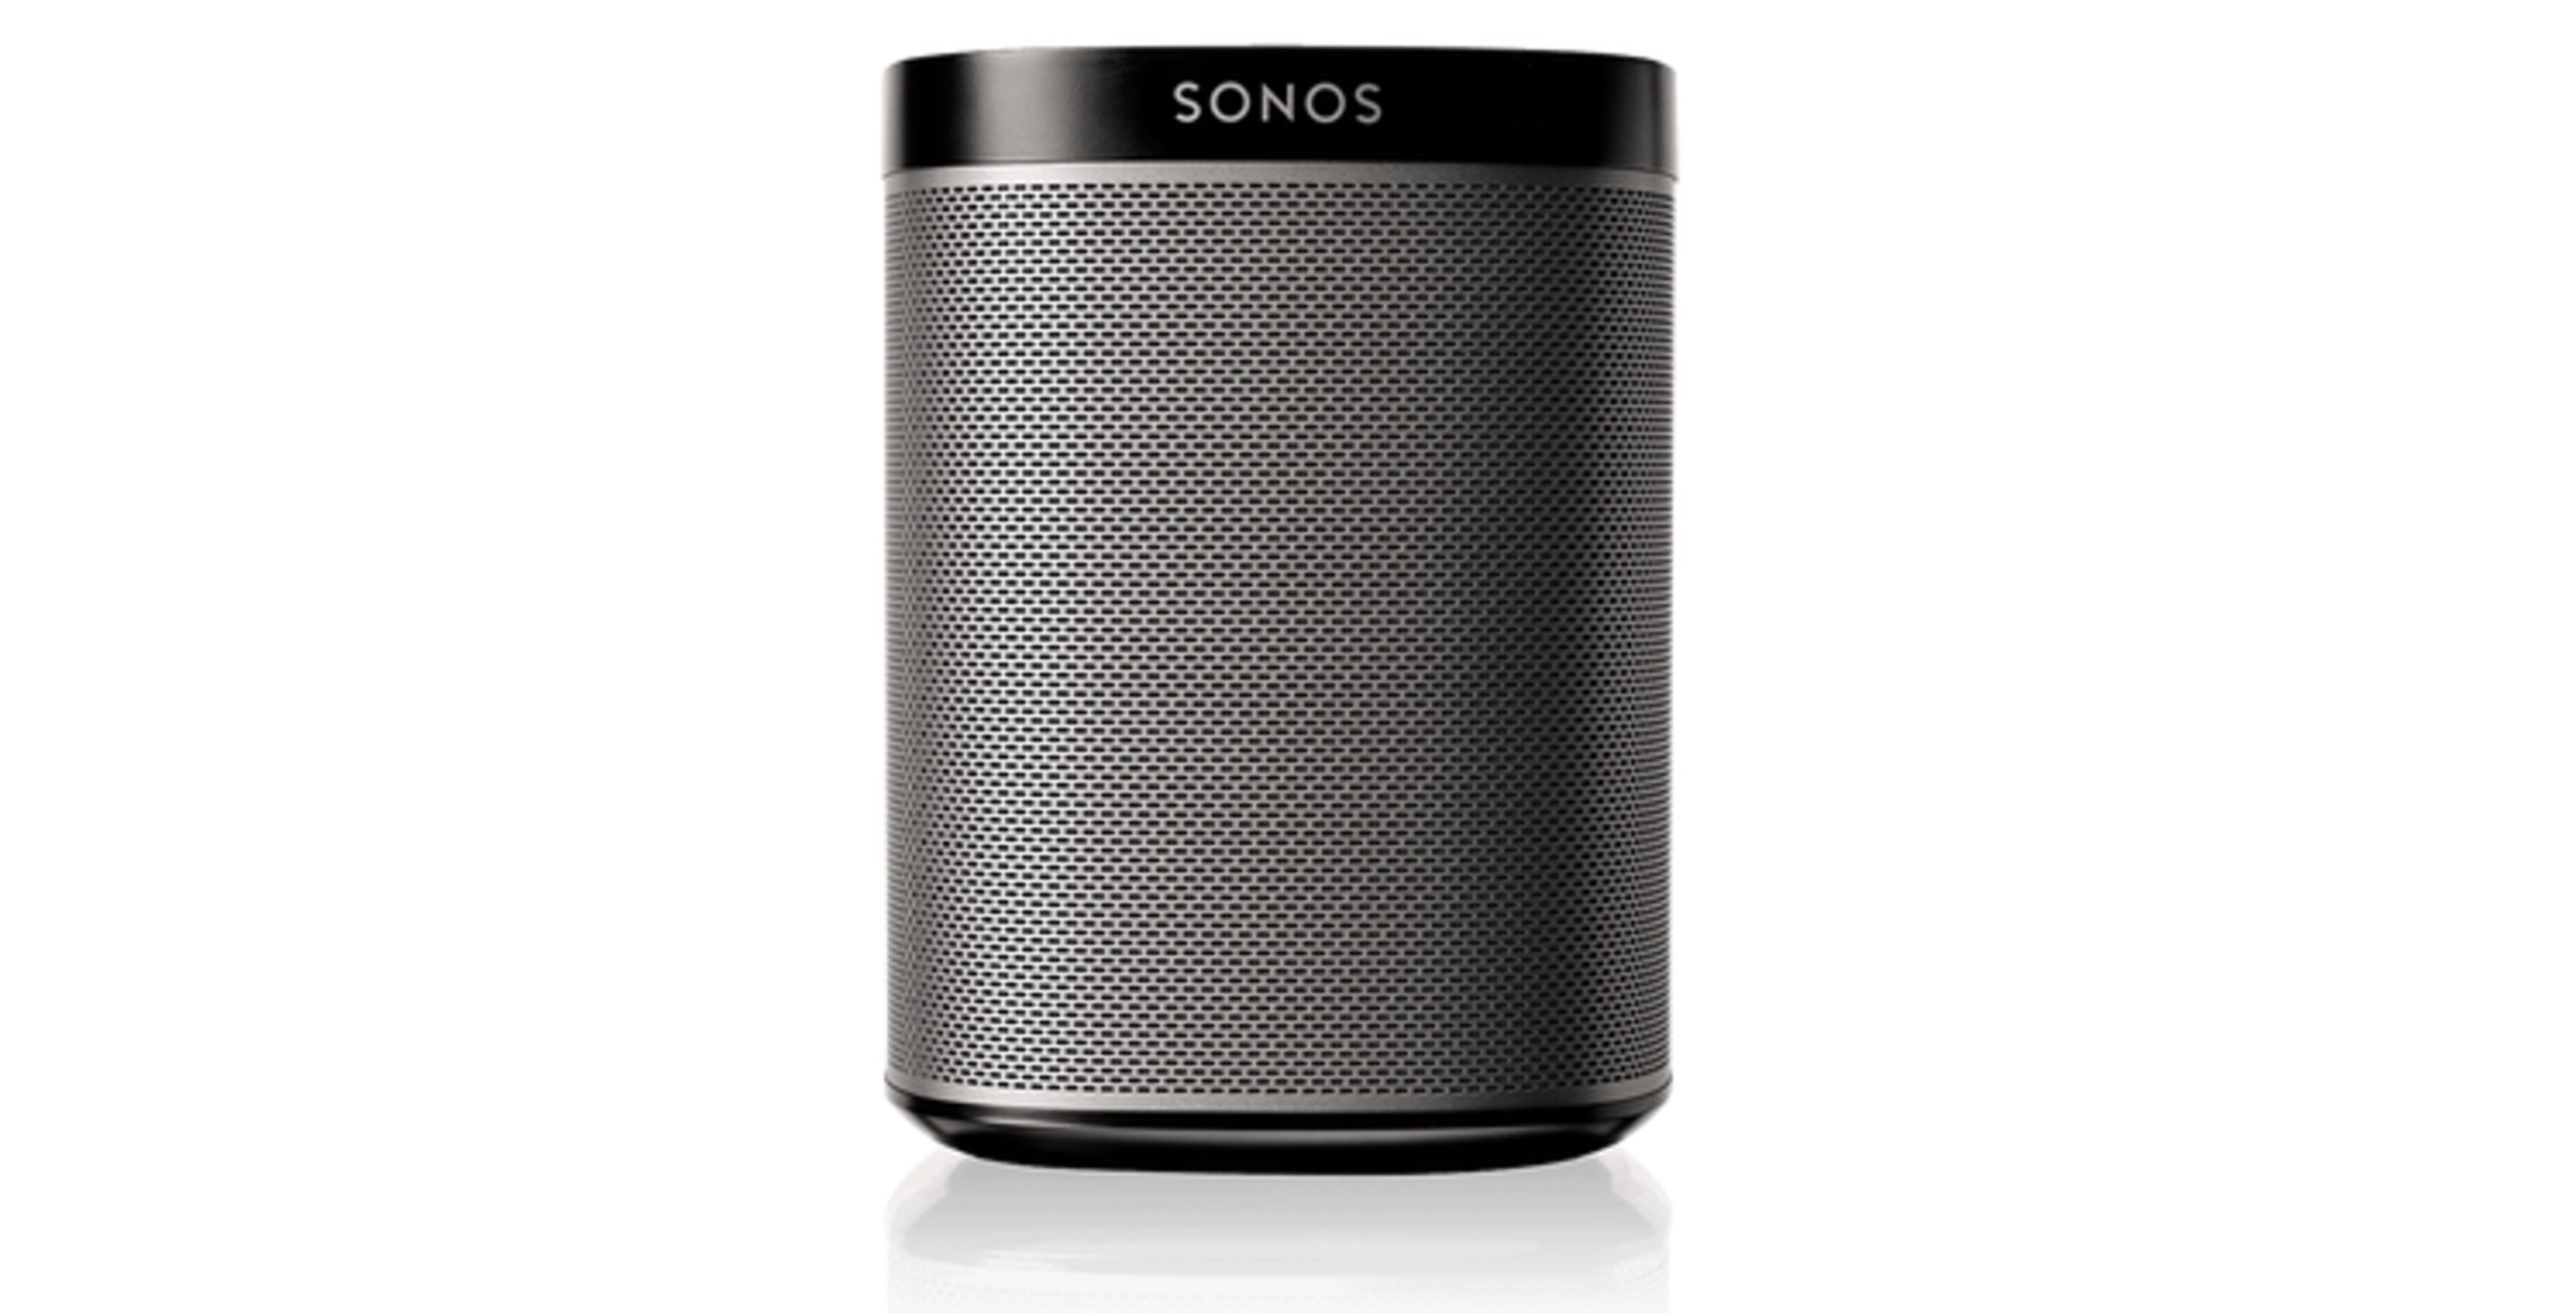 The original Sonos Play:1 speaker